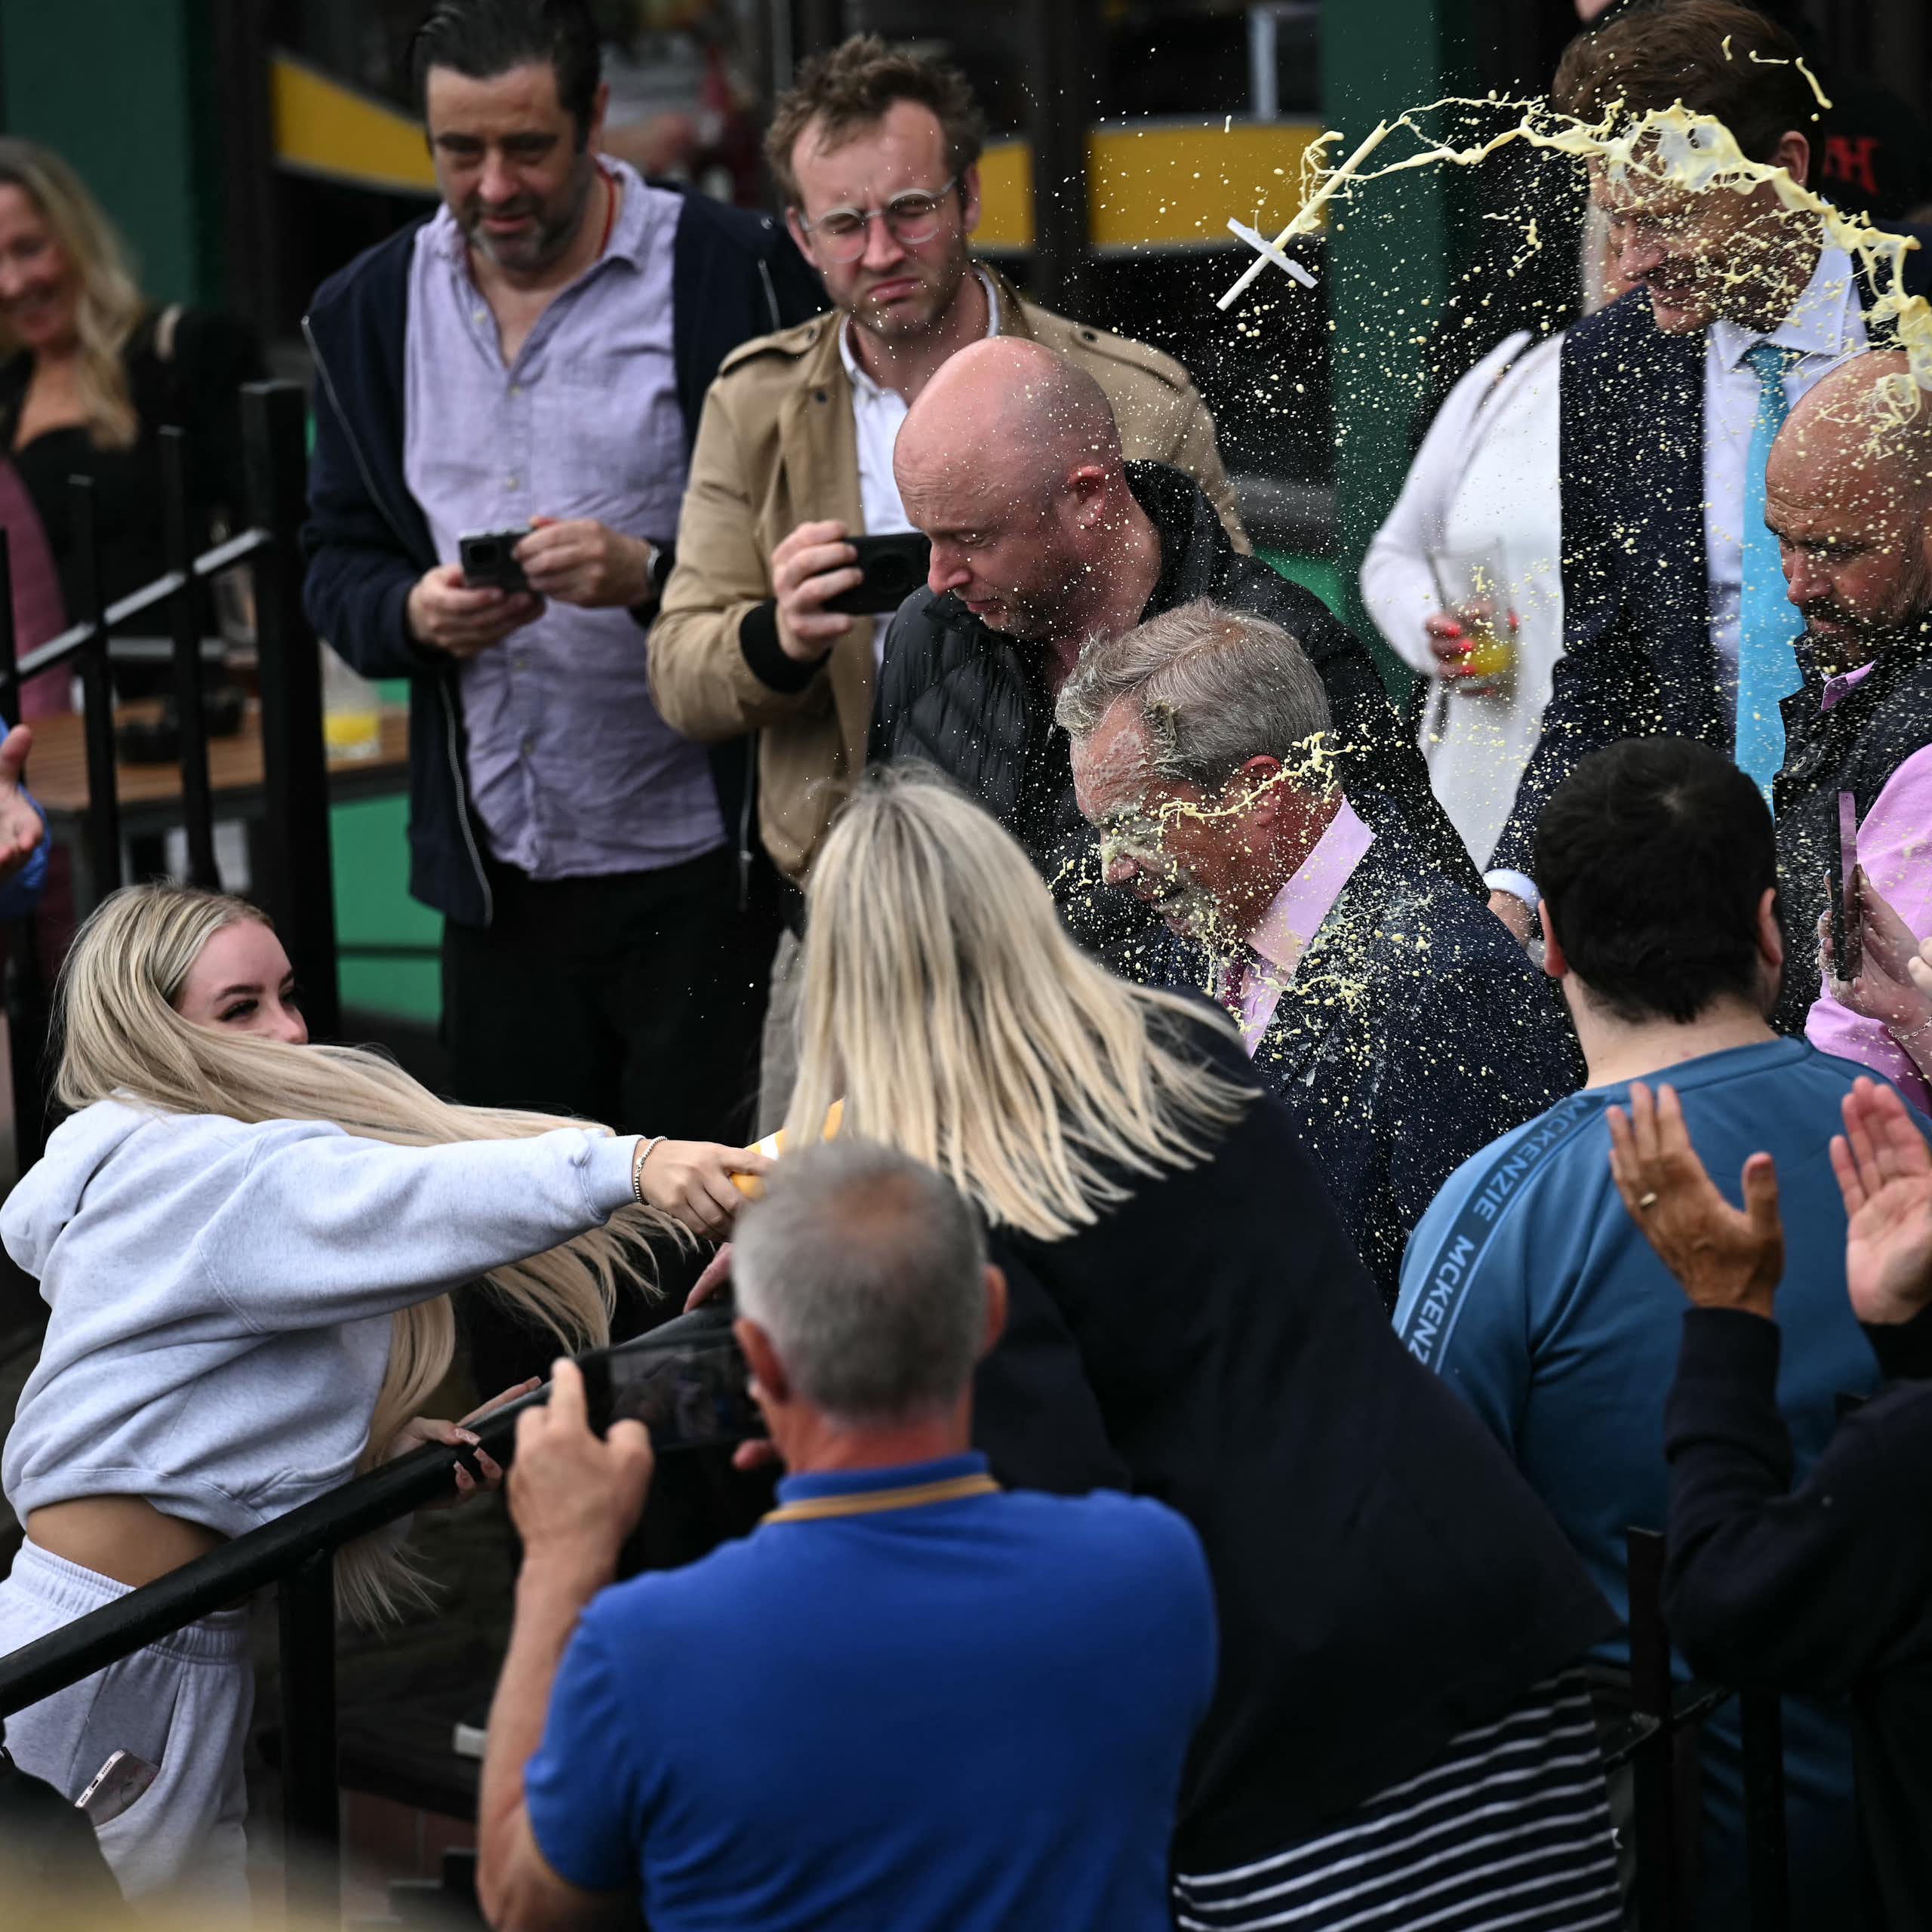 Woman in crowd throws a milkshake at a man.